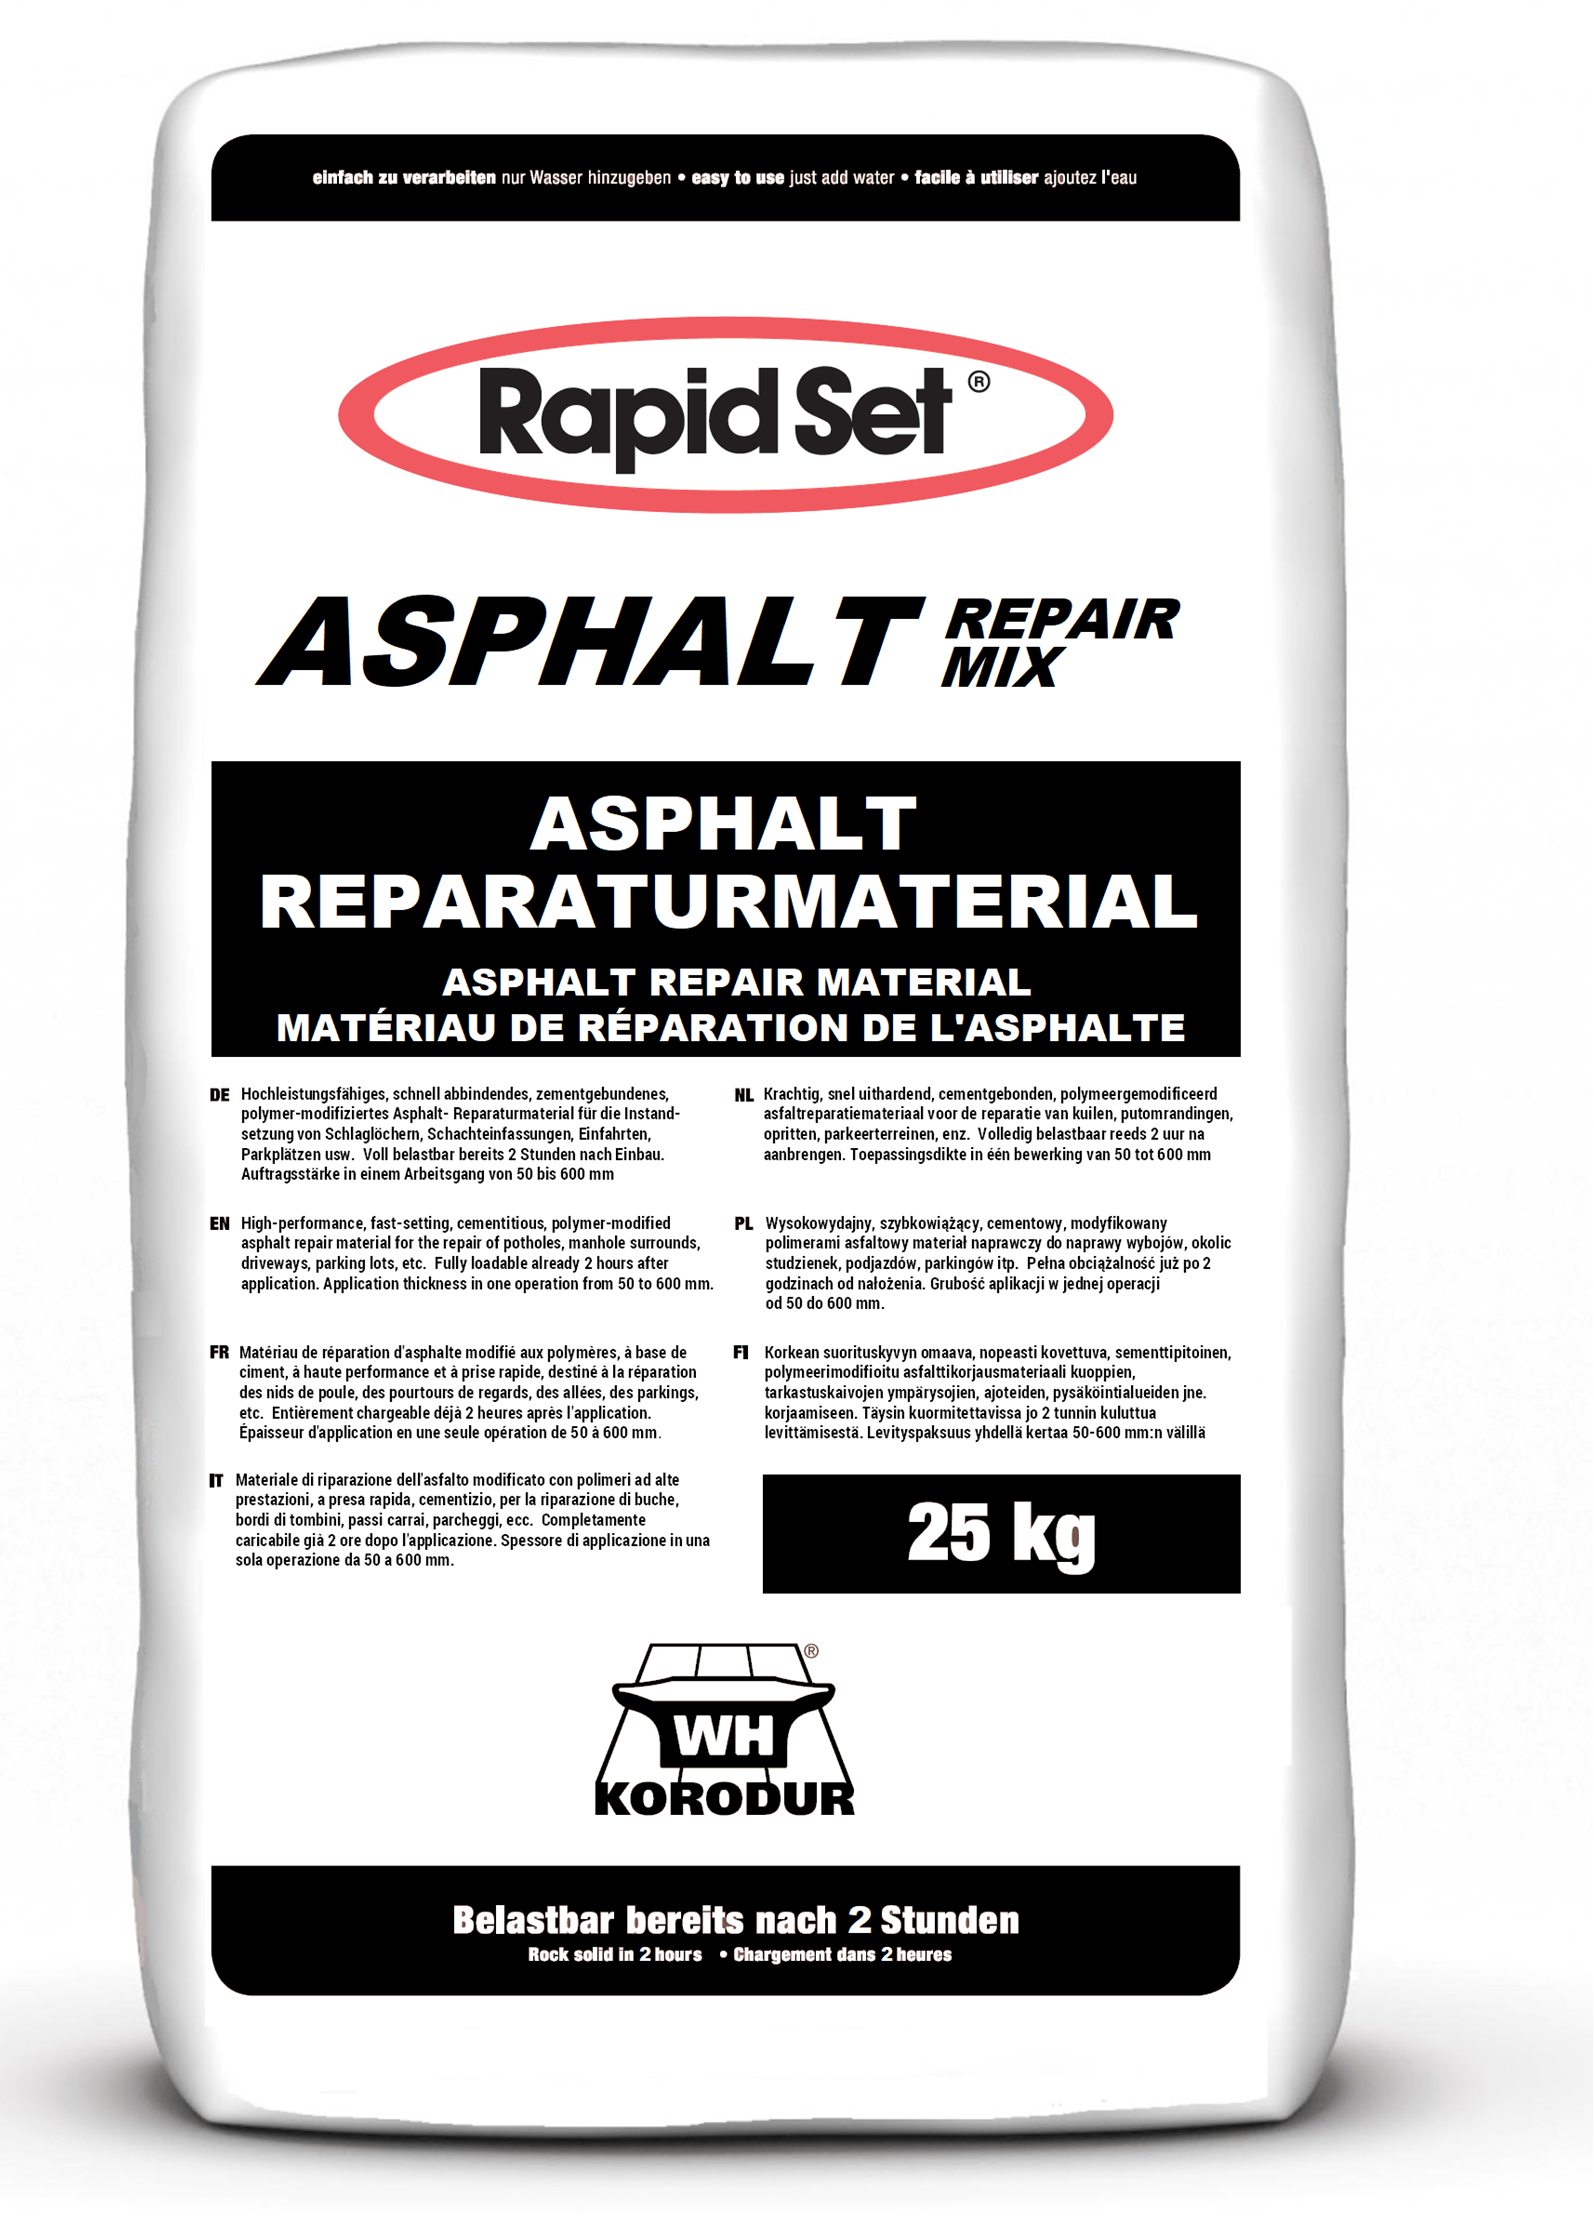 Asphalt repair mix